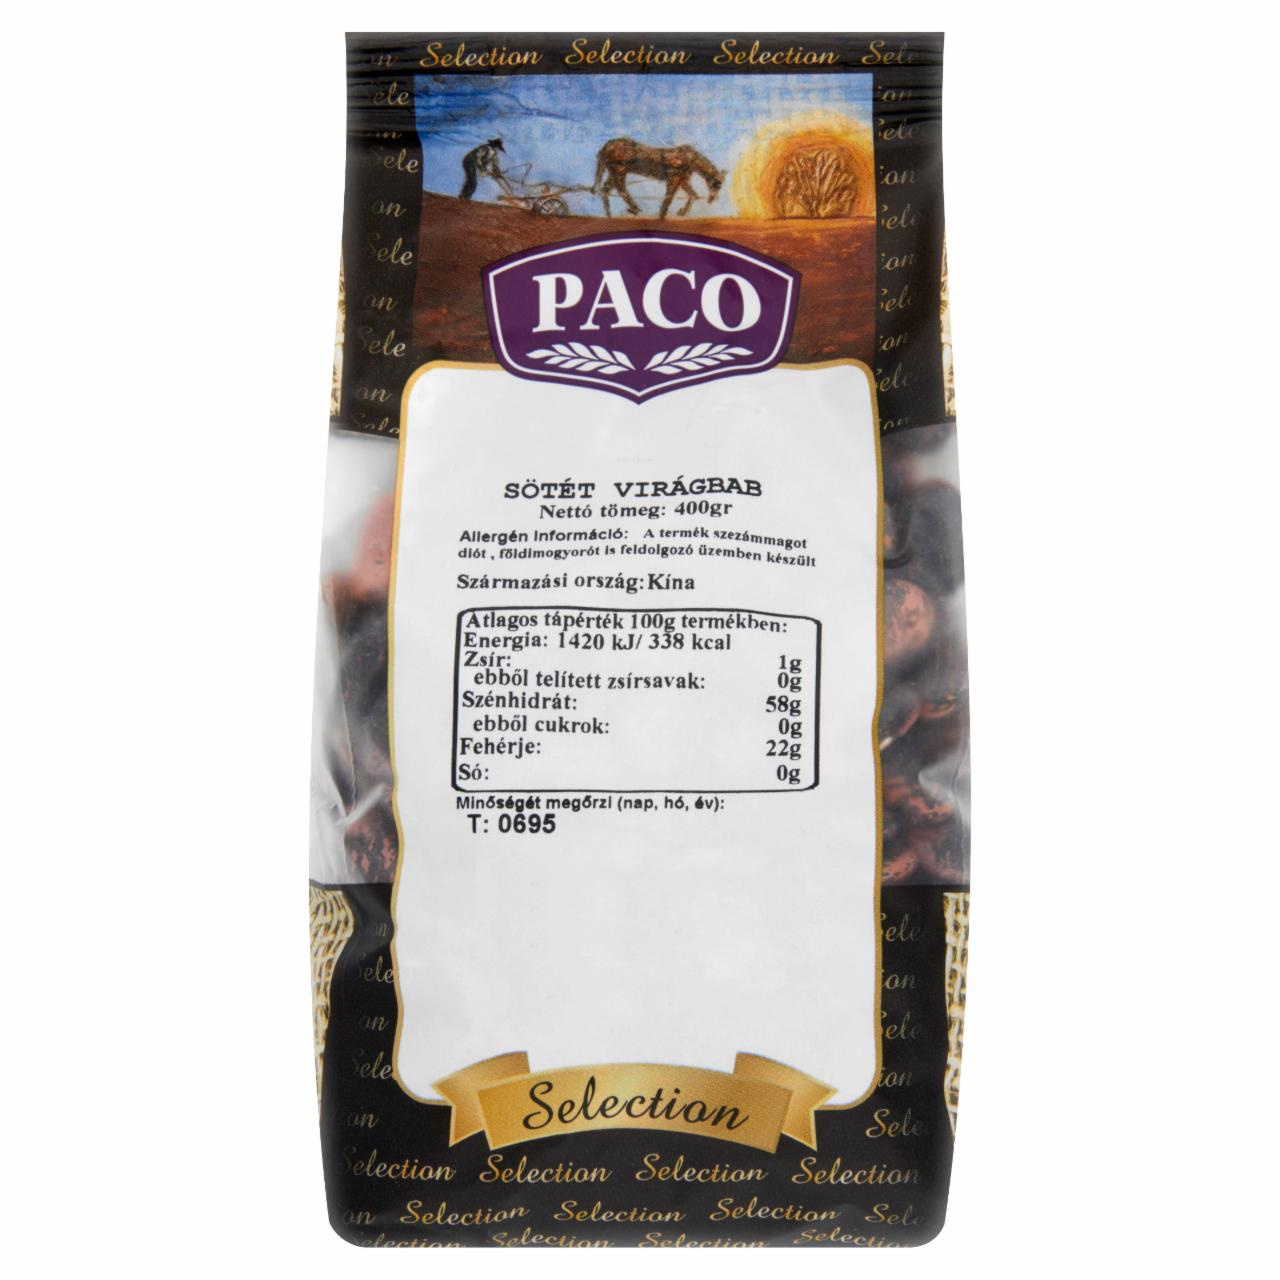 Képek - Paco Selection sötét virágbab 400 g